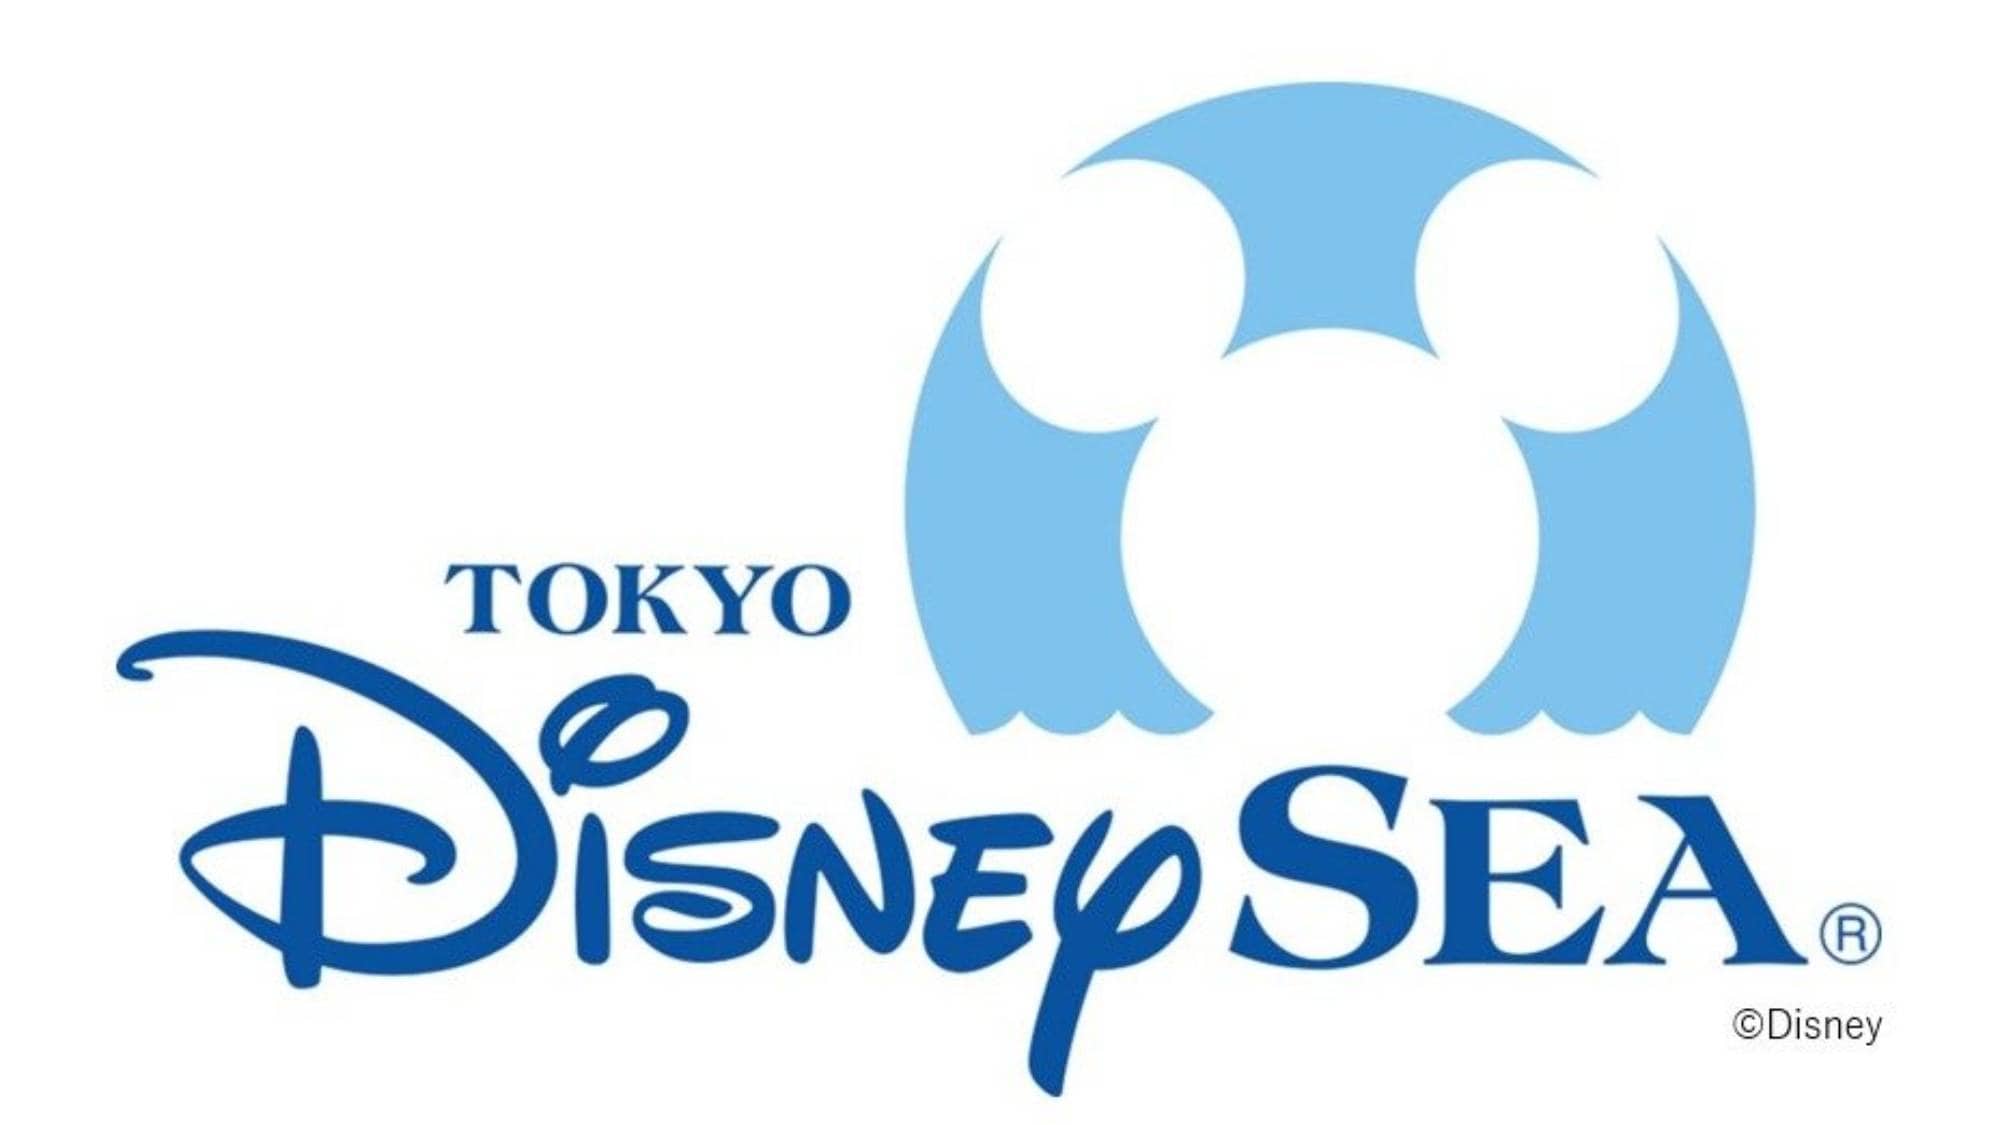 Tokyo DisneySea(R)